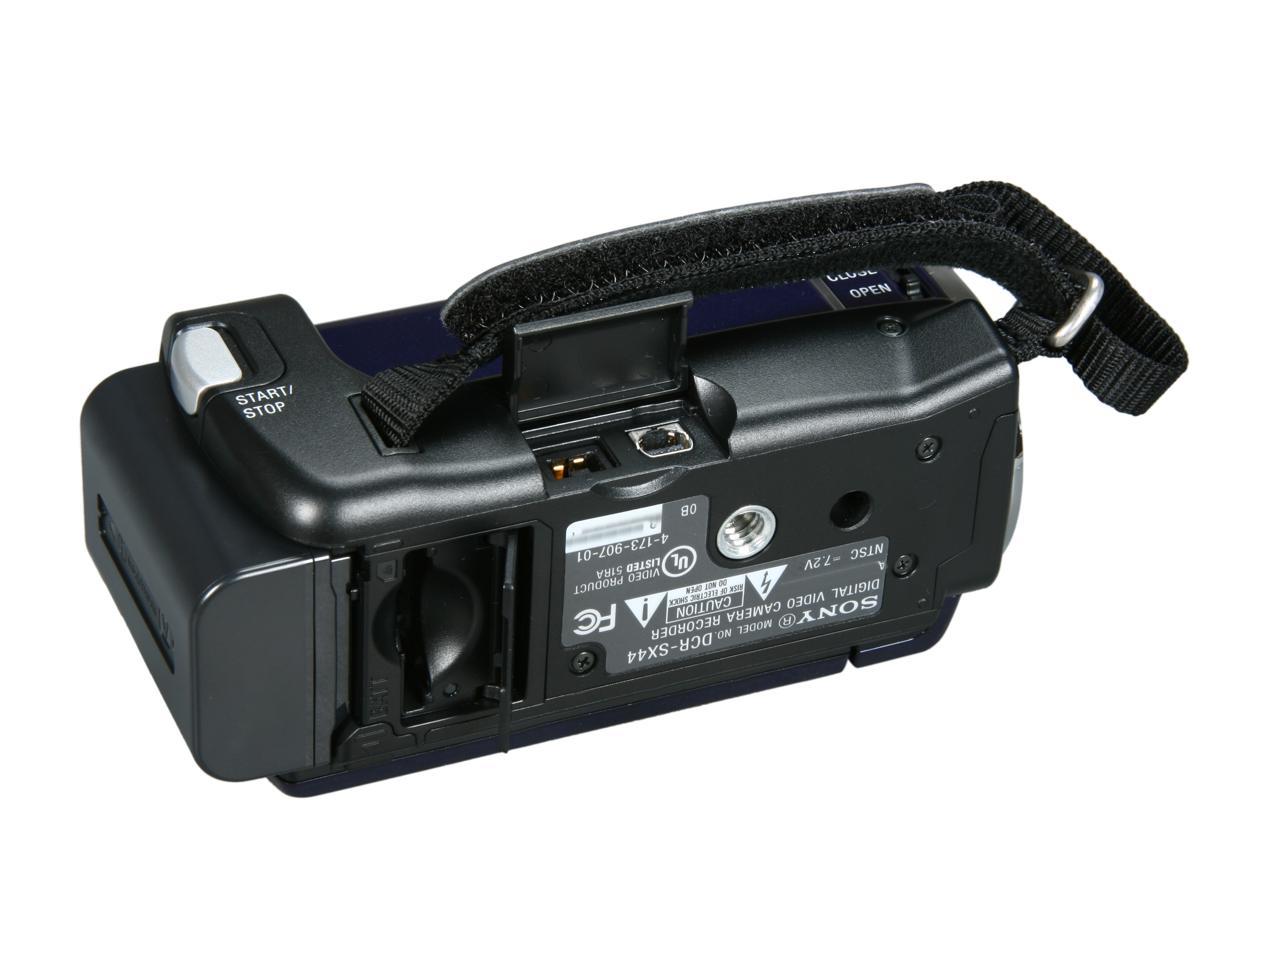 sony handycam dcr sx44 4gb digital video camera camcorder